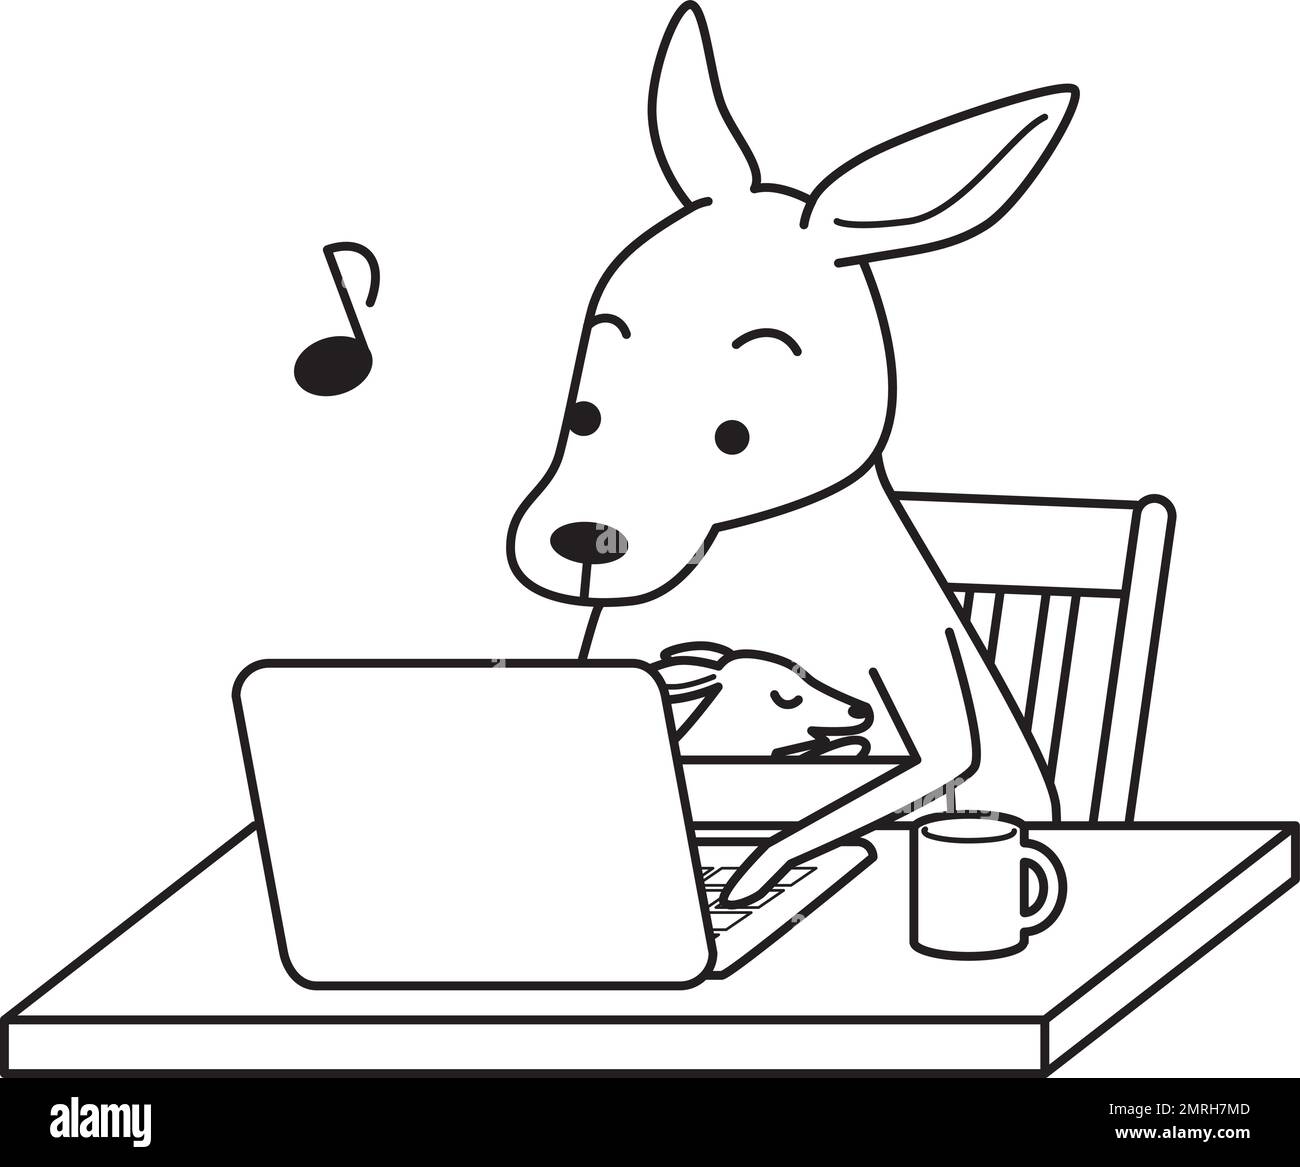 Kangaroo raising a child looking at a computer. Black and white line drawing. Humorous animal illustrations. Stock Vector